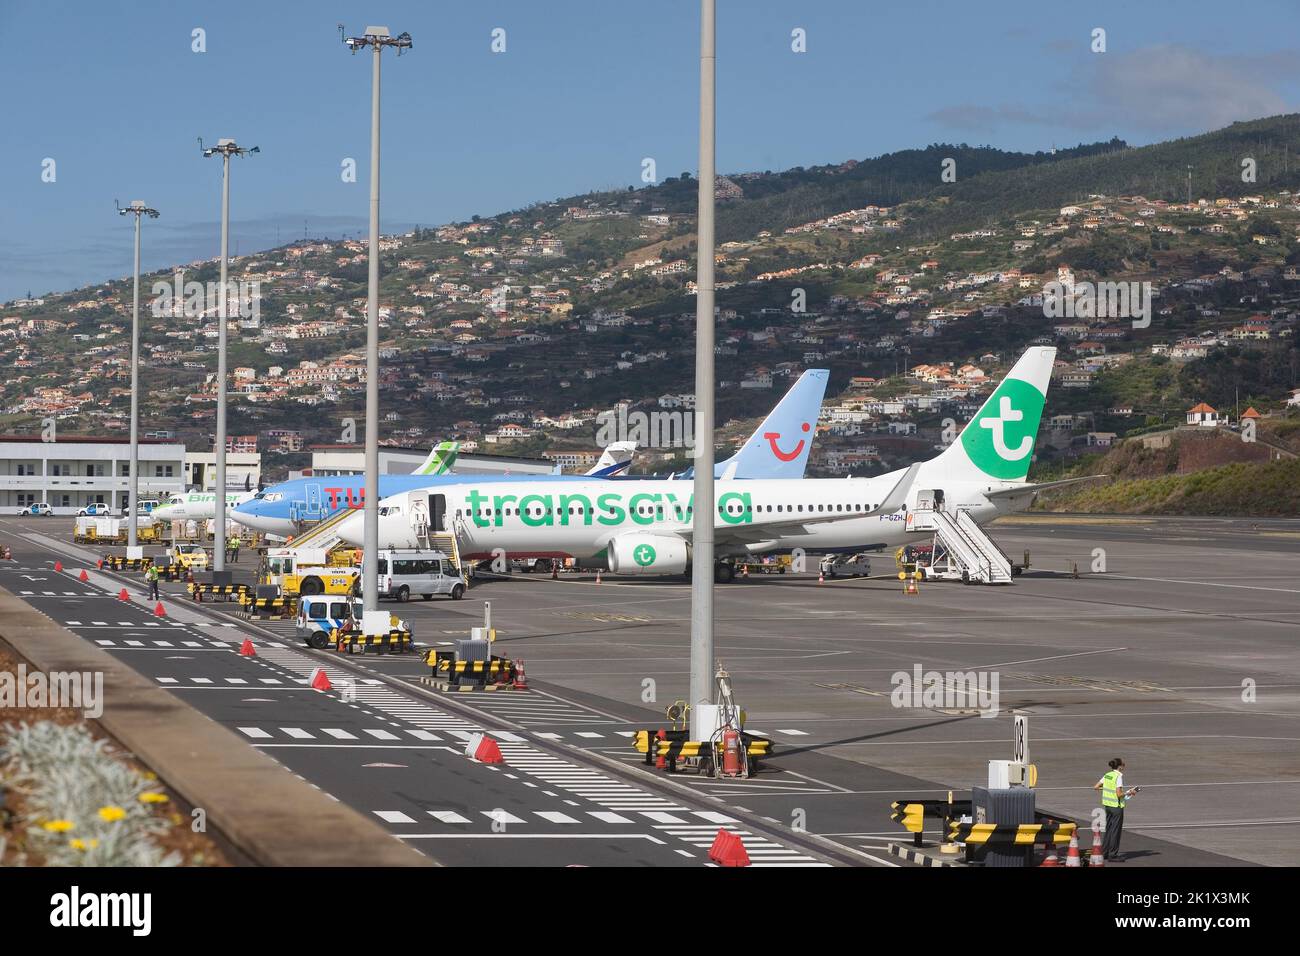 Transavia and Tui aeroplanes on stand at Cristiano Ronaldo airport Madeira Stock Photo